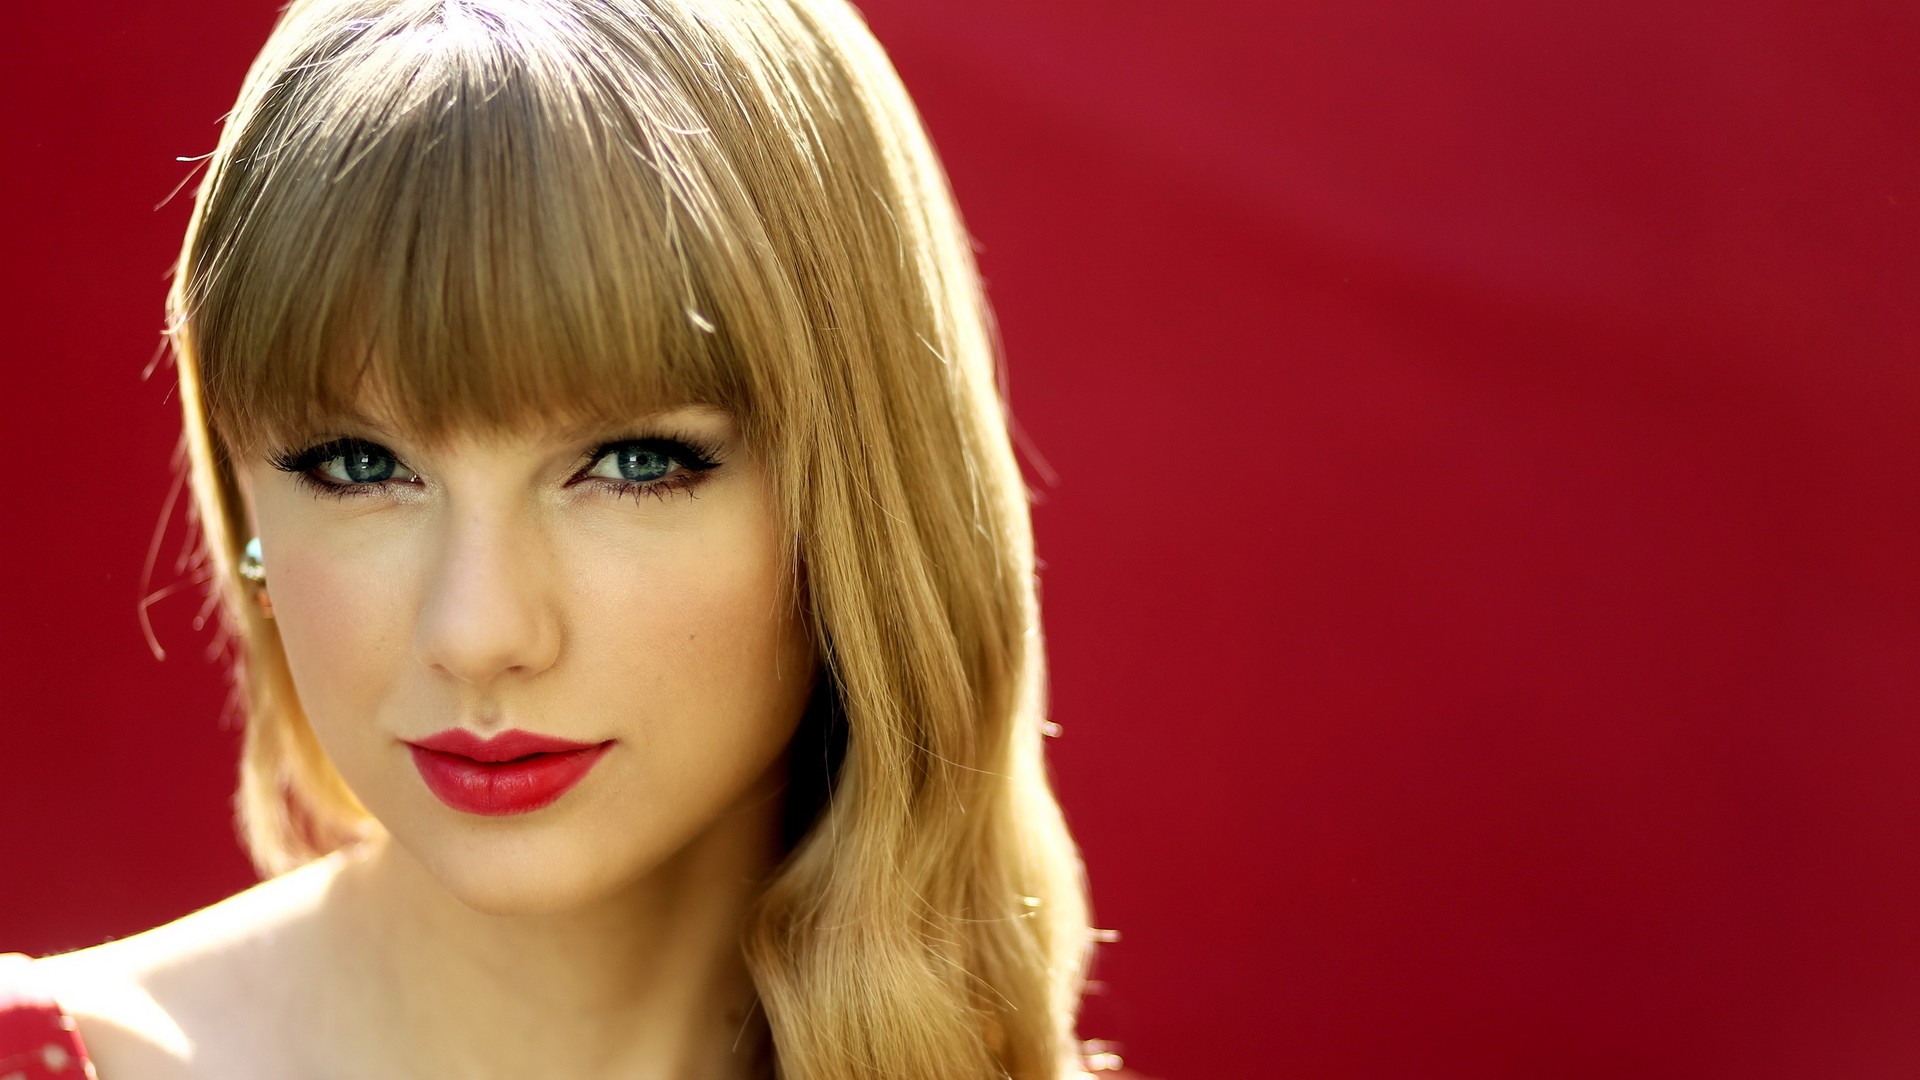 Red Taylor Swift HD Wallpaper Imagebank Biz